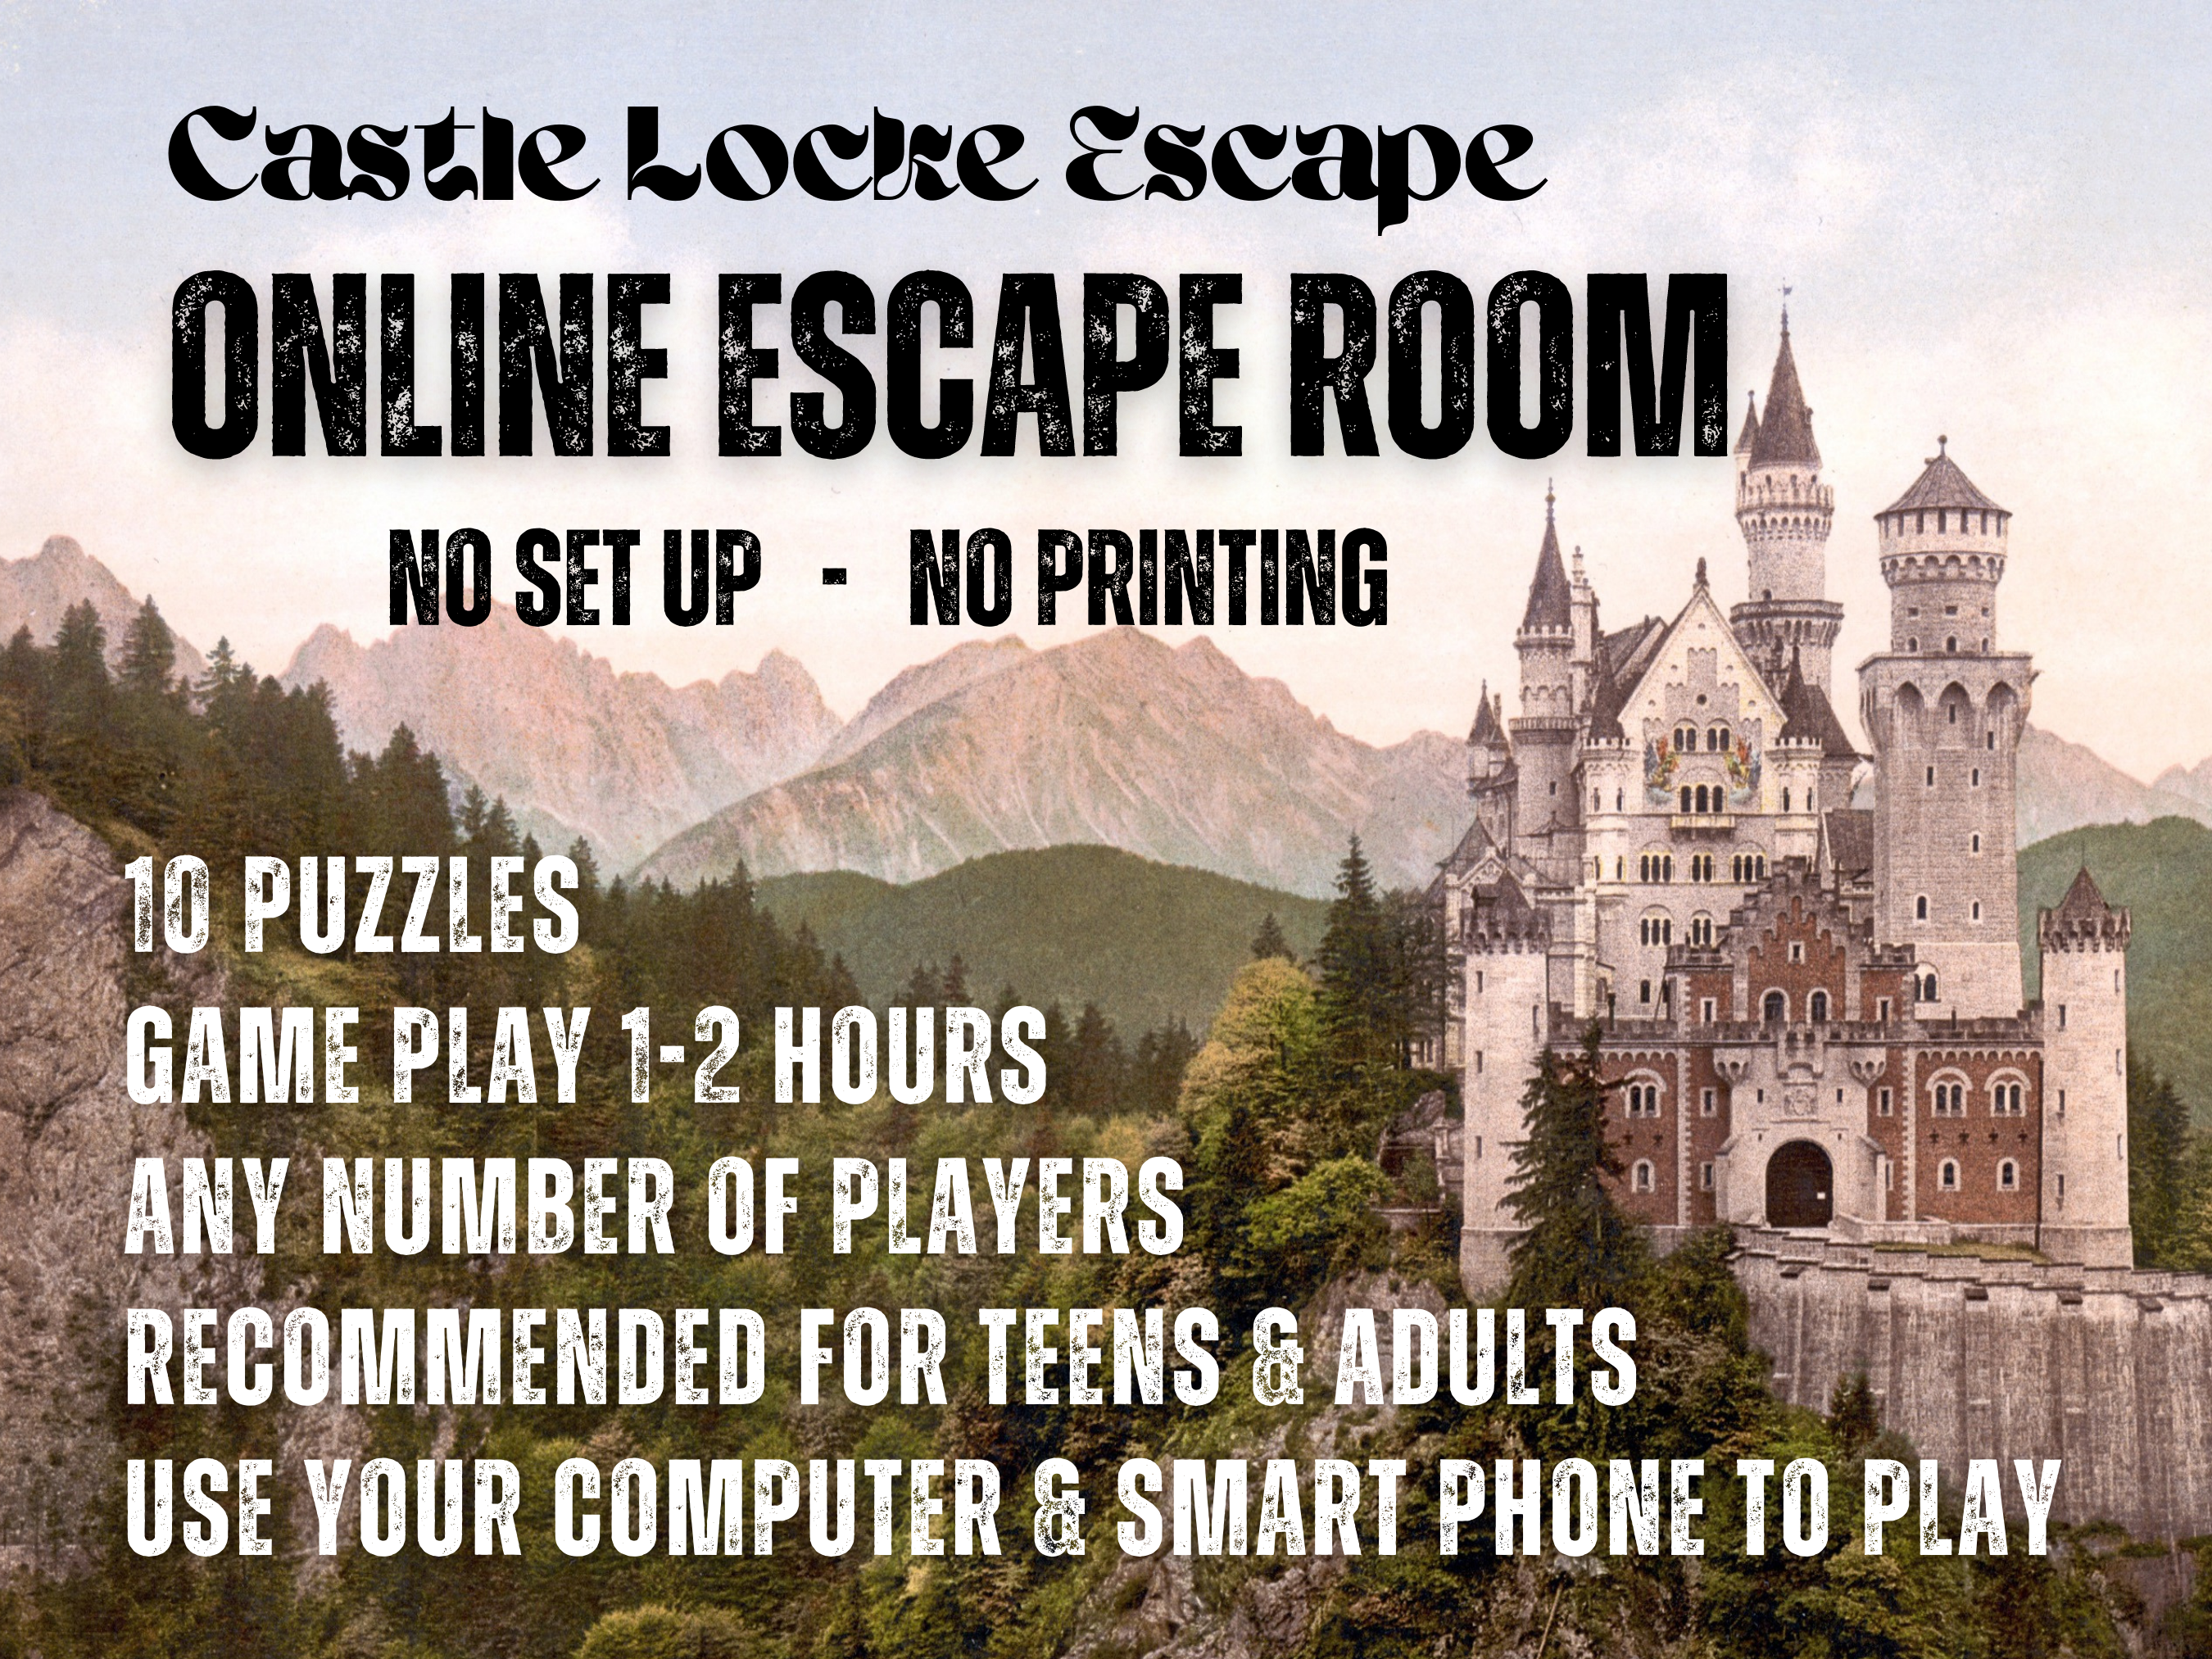 Escape Kid - Jogo Grátis Online